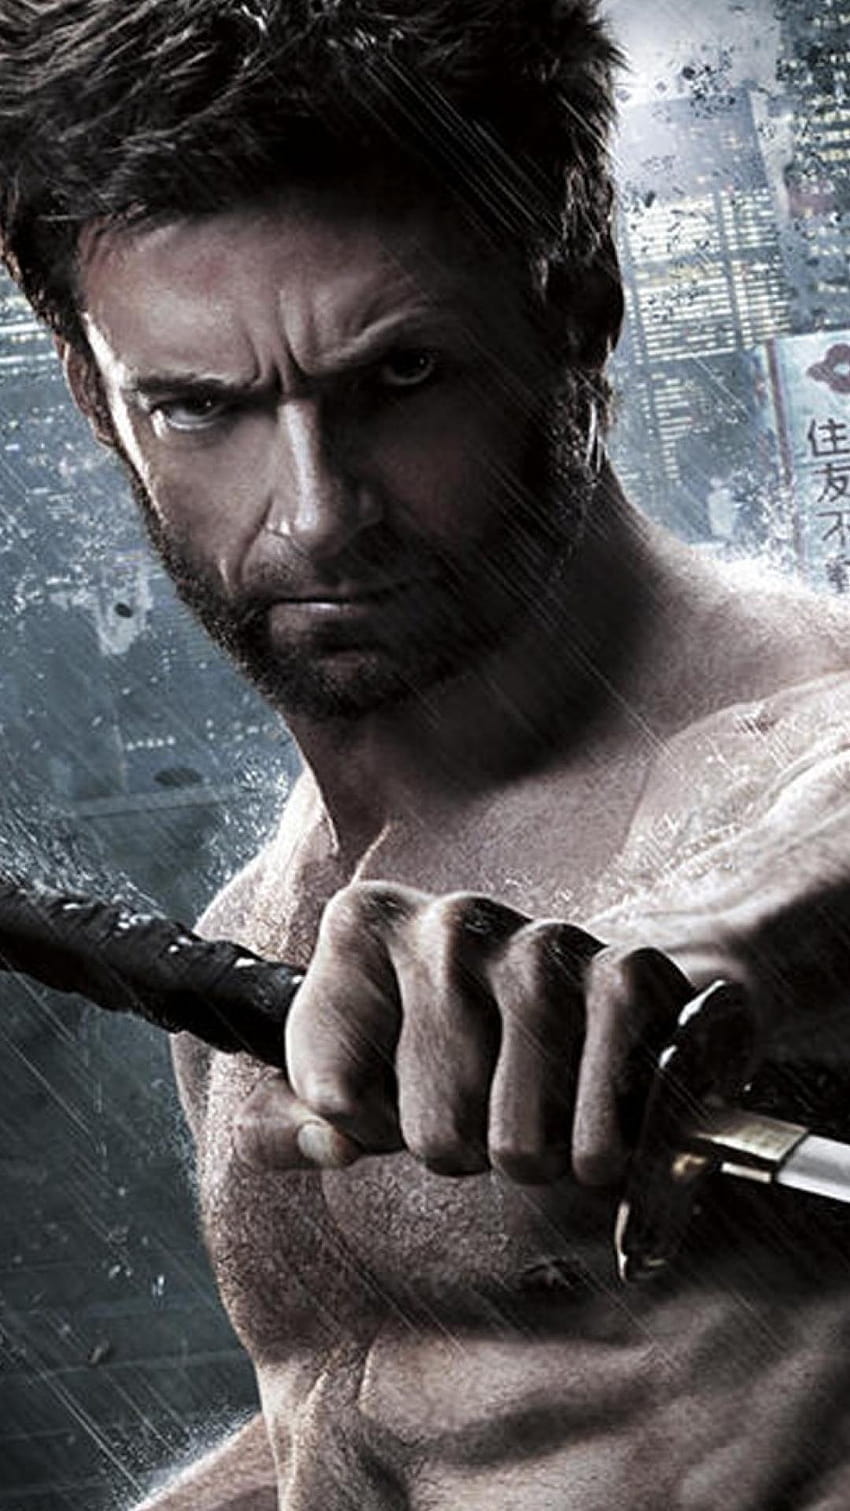 Hugh Jackman as Wolverine Digital Art Wallpaper 4k Ultra HD ID:4749